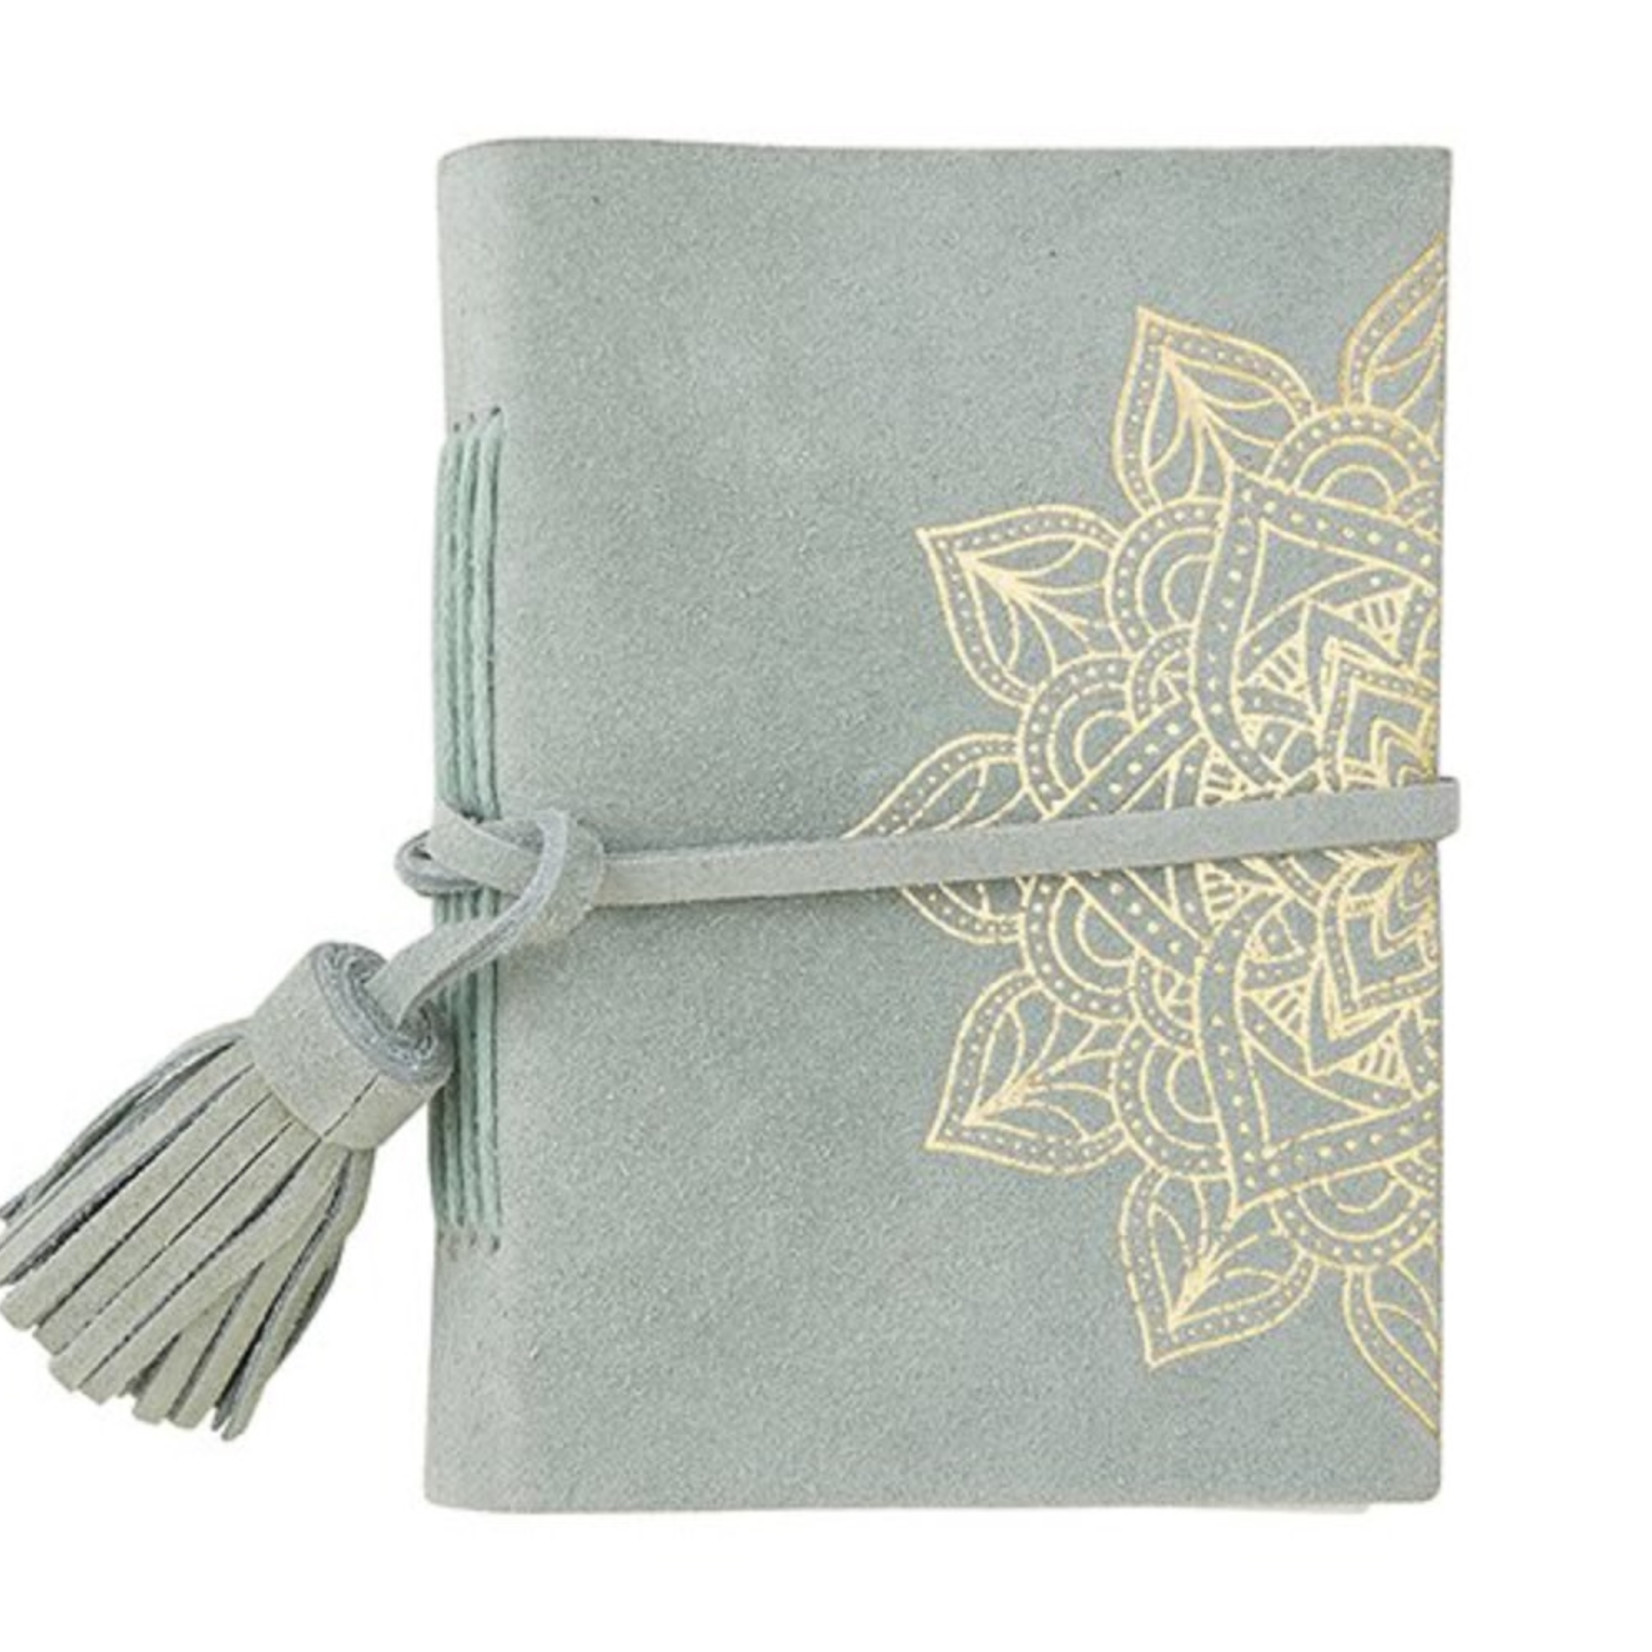 SB Designs Suede notebook - mist mandala